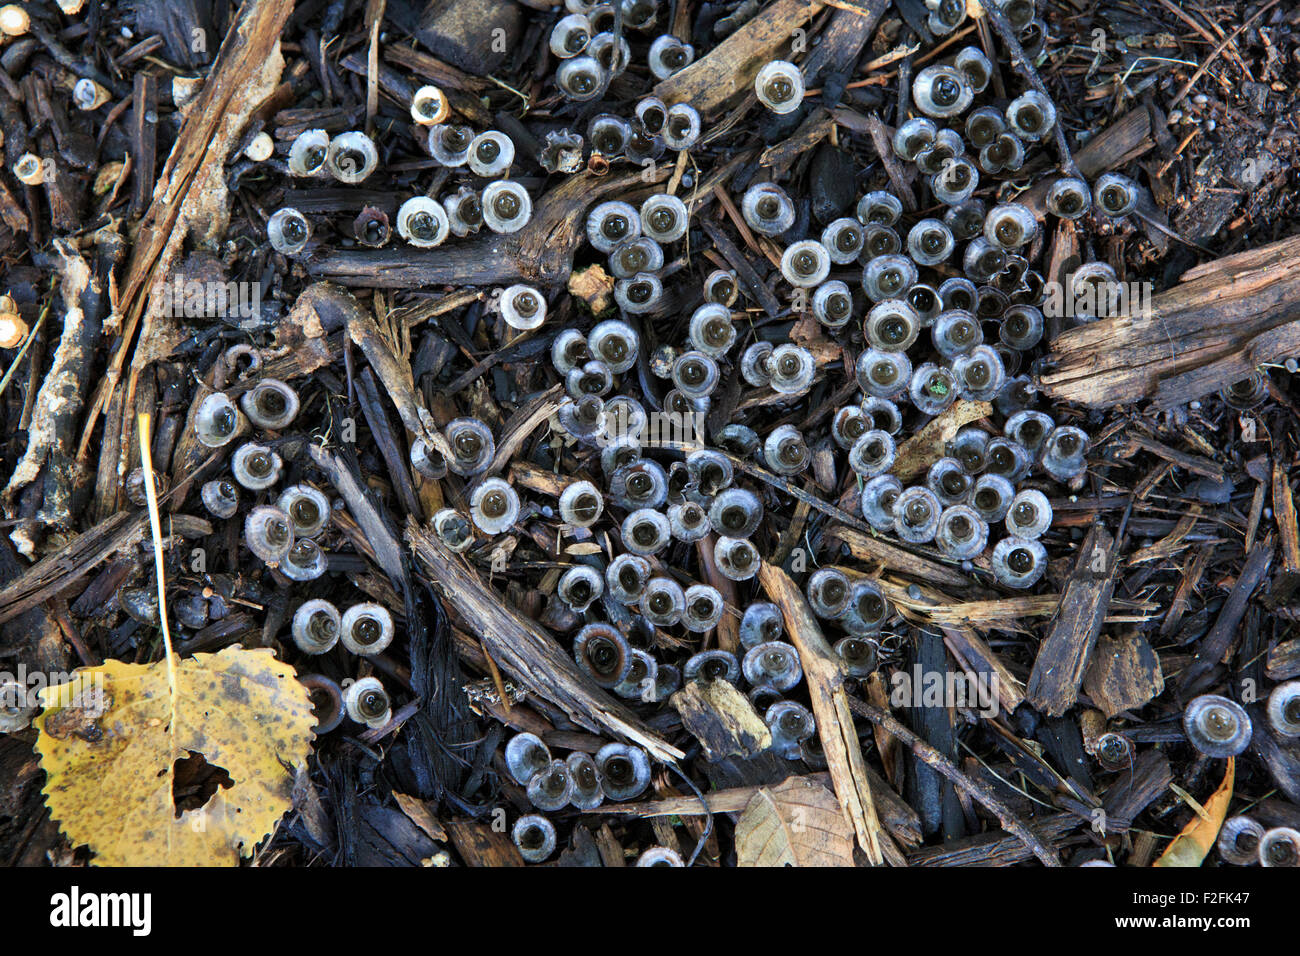 Bird's nest fungus on wood chip mulch Stock Photo